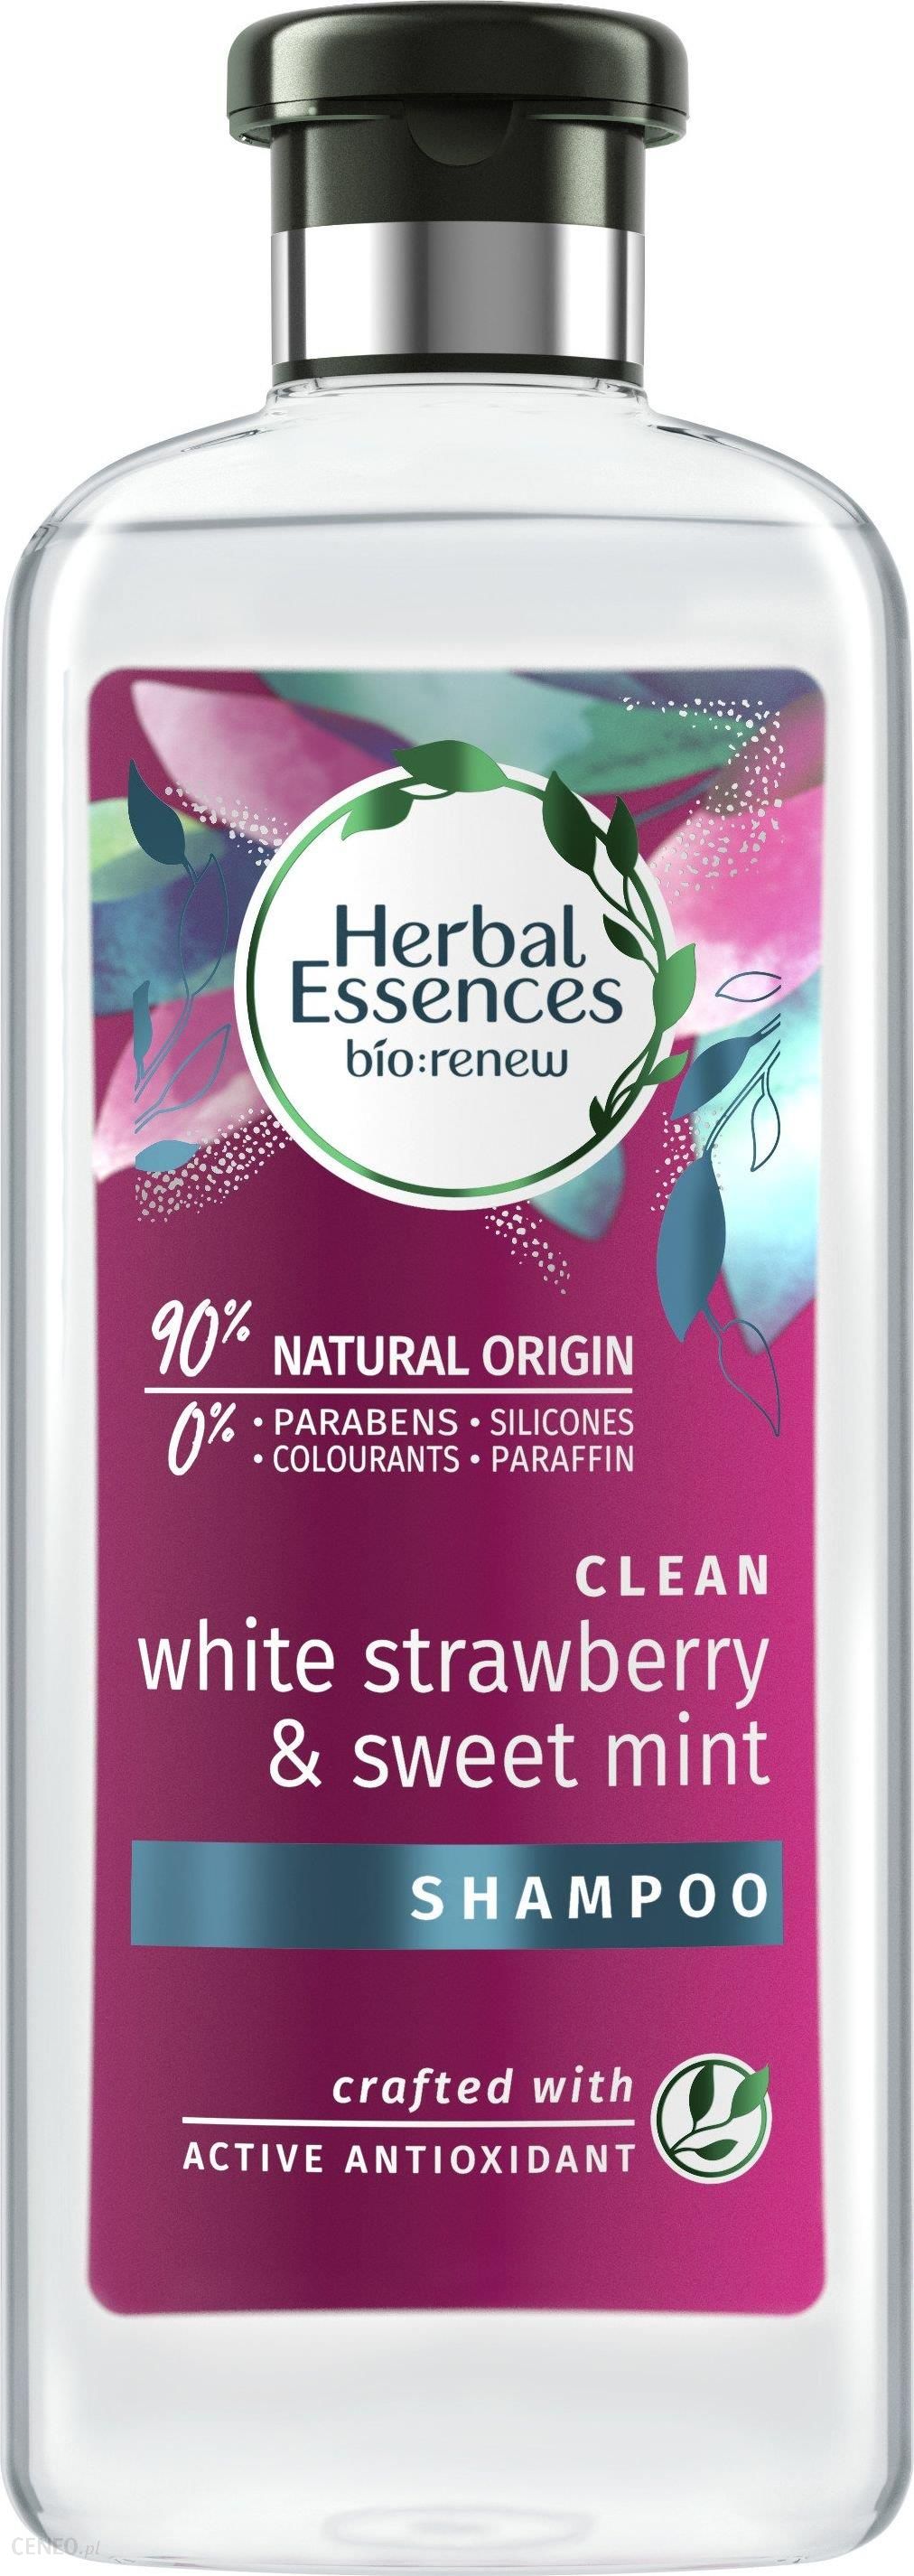 herbal essences szampon argan oil kręcone